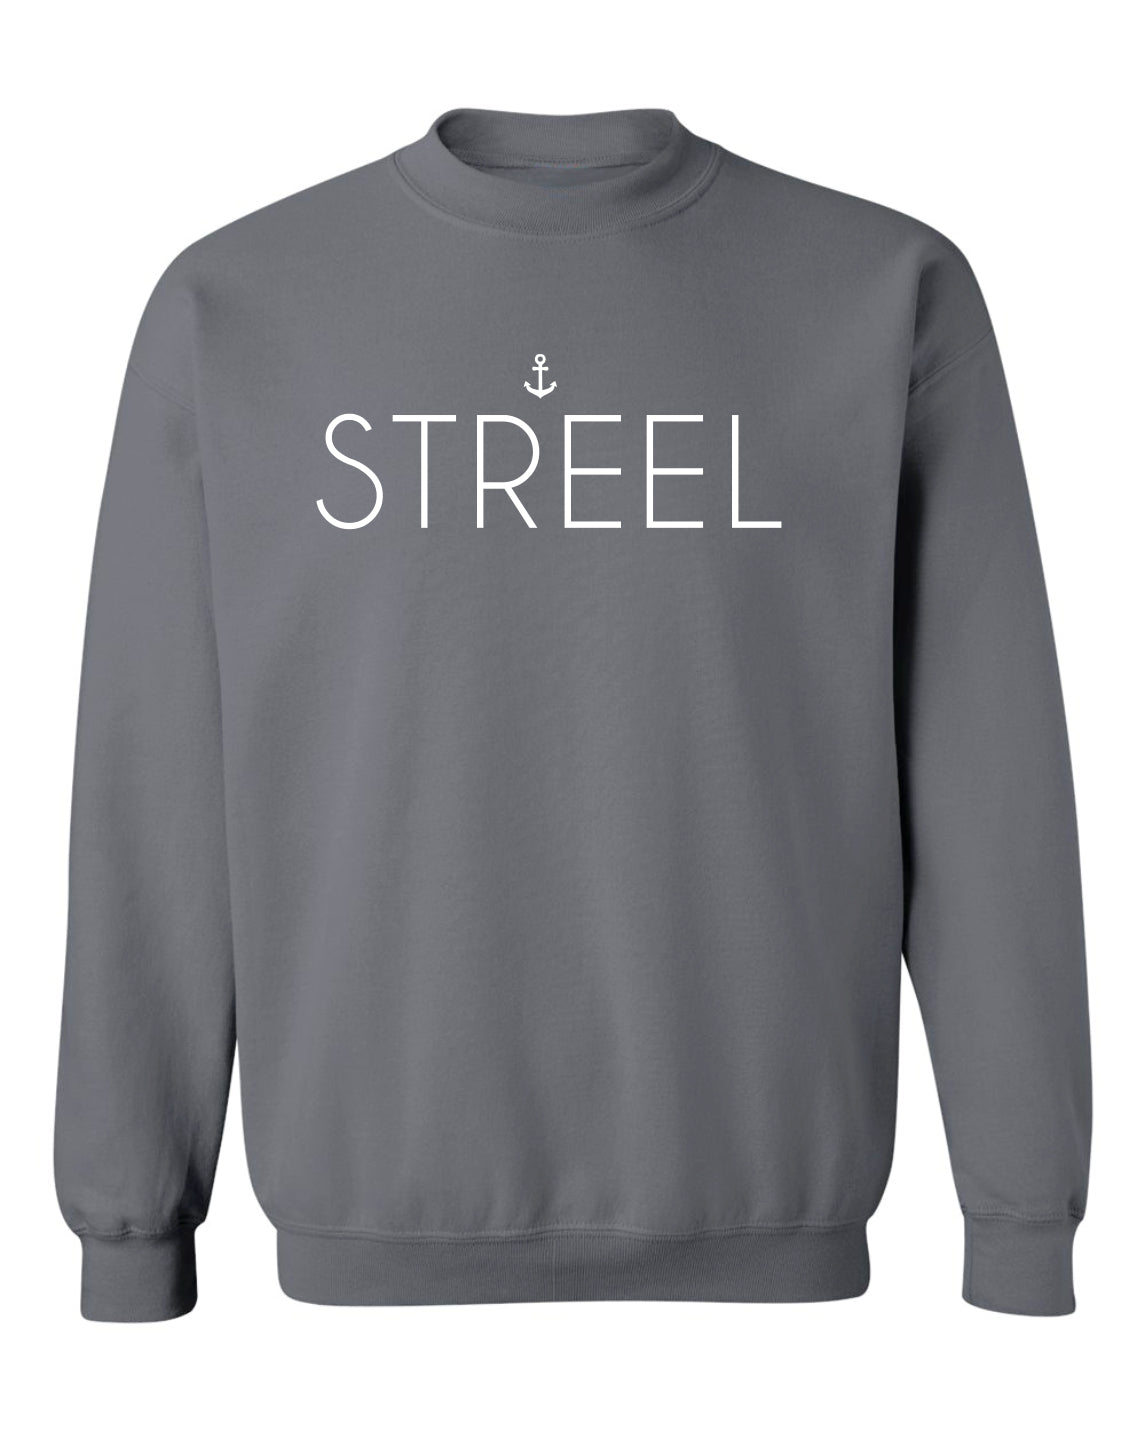 "Streel" Unisex Crewneck Sweatshirt